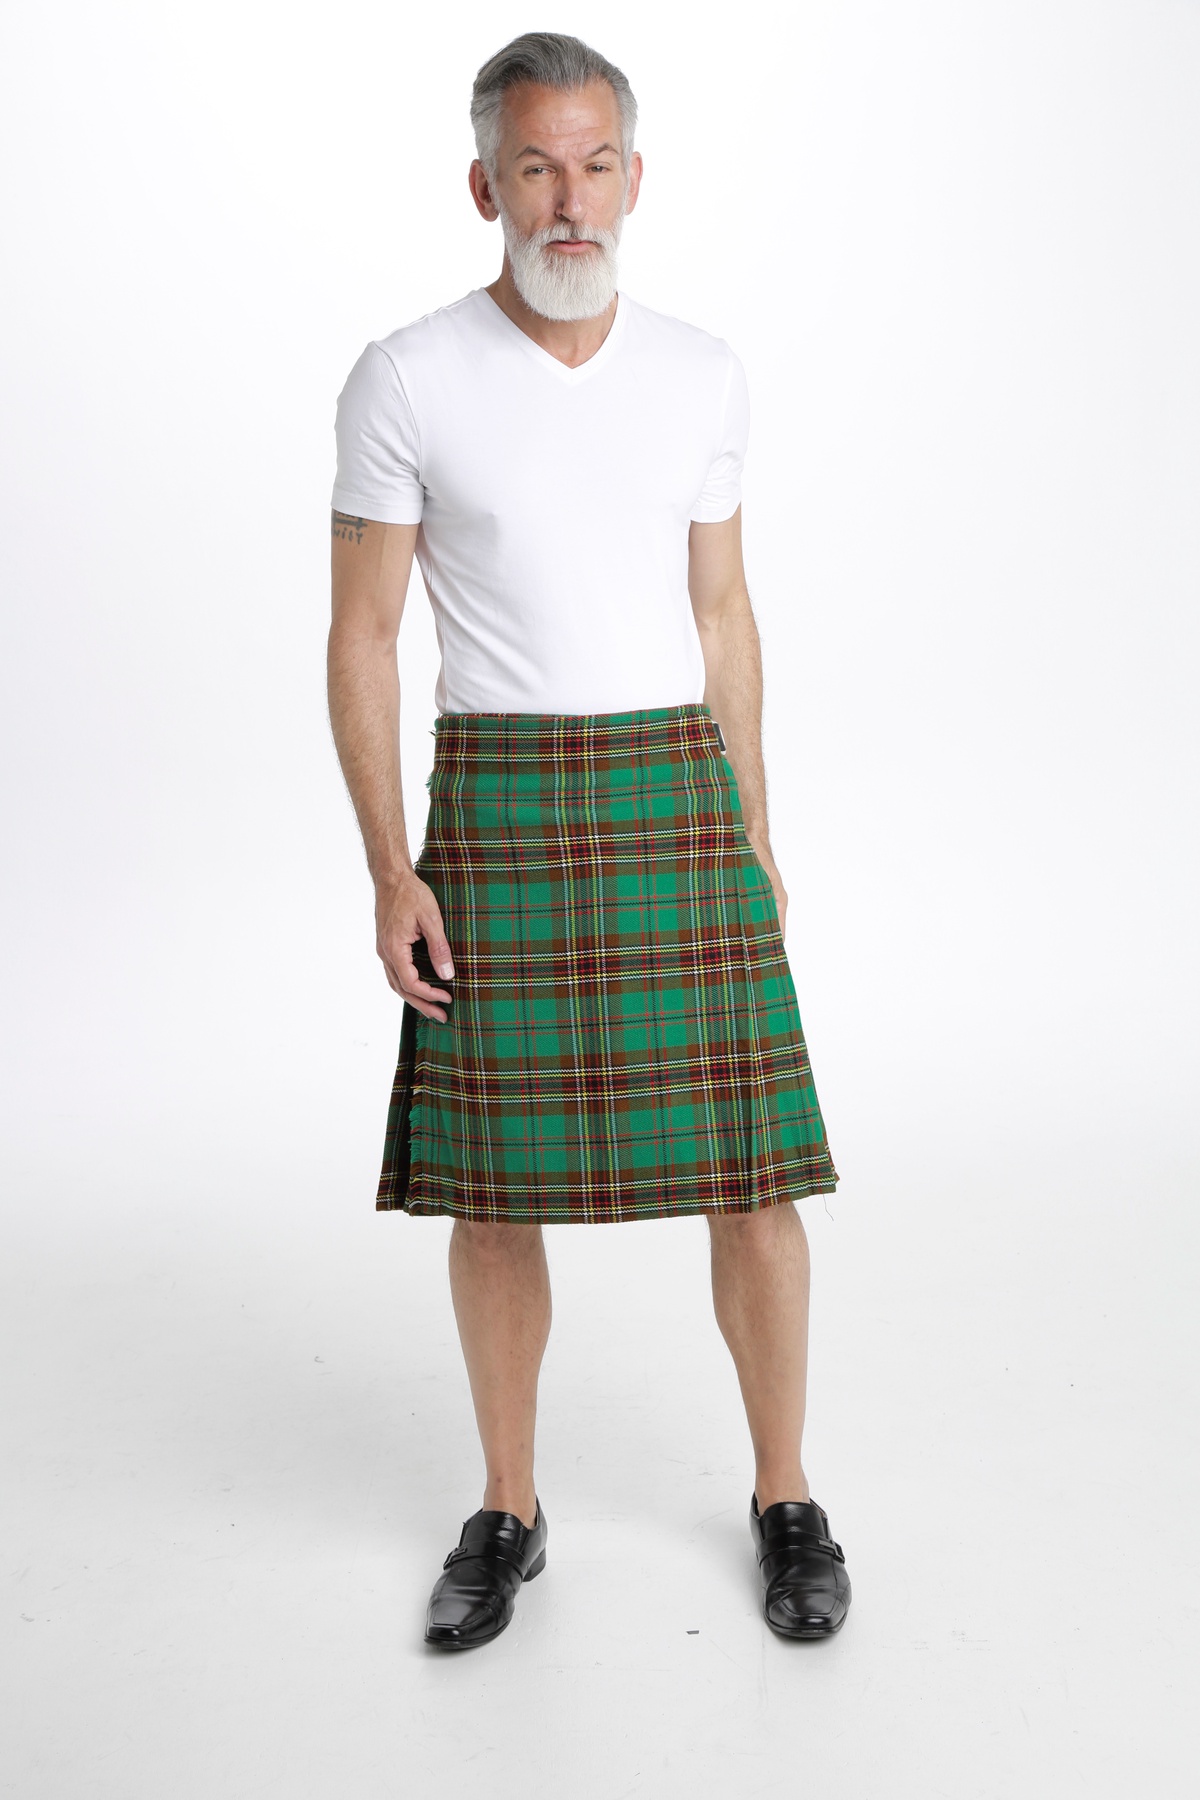 Scottish Kilt Elegance: Fashion KIlt Unveils a Timeless Collection